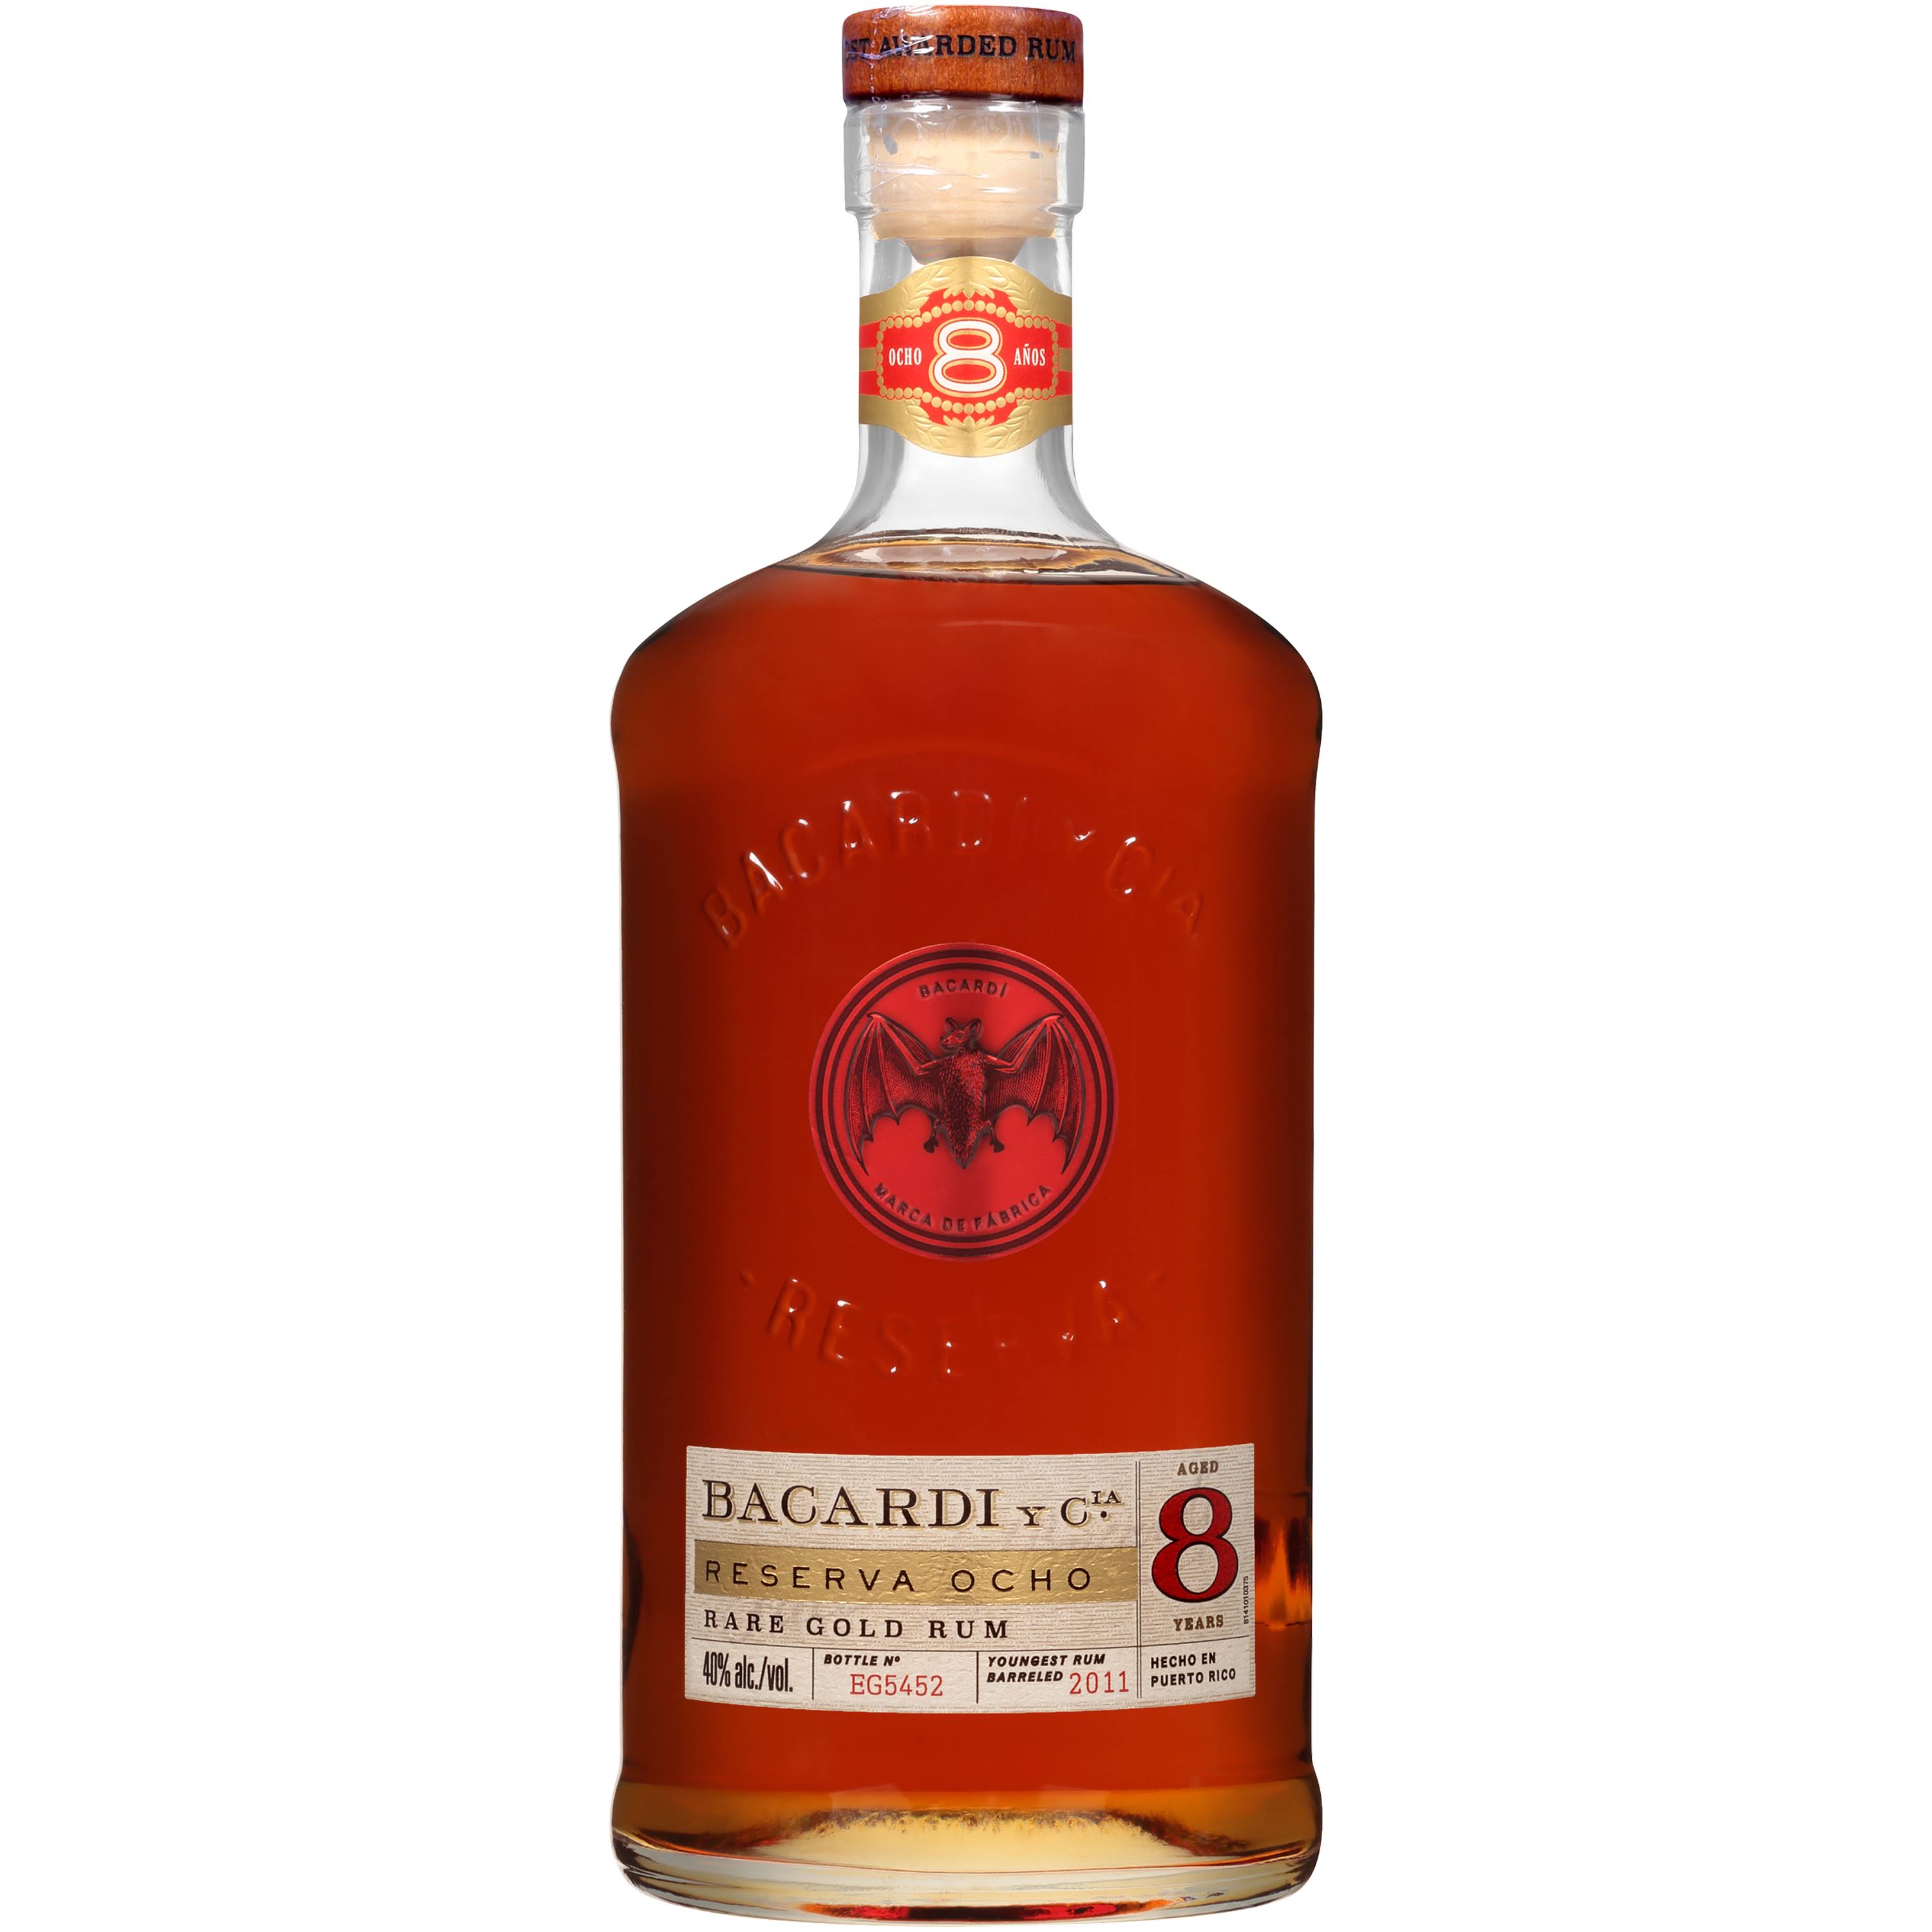 Bacardi 8 Años Reserva Ocho Rare Gold Rum 40% Vol. 1L